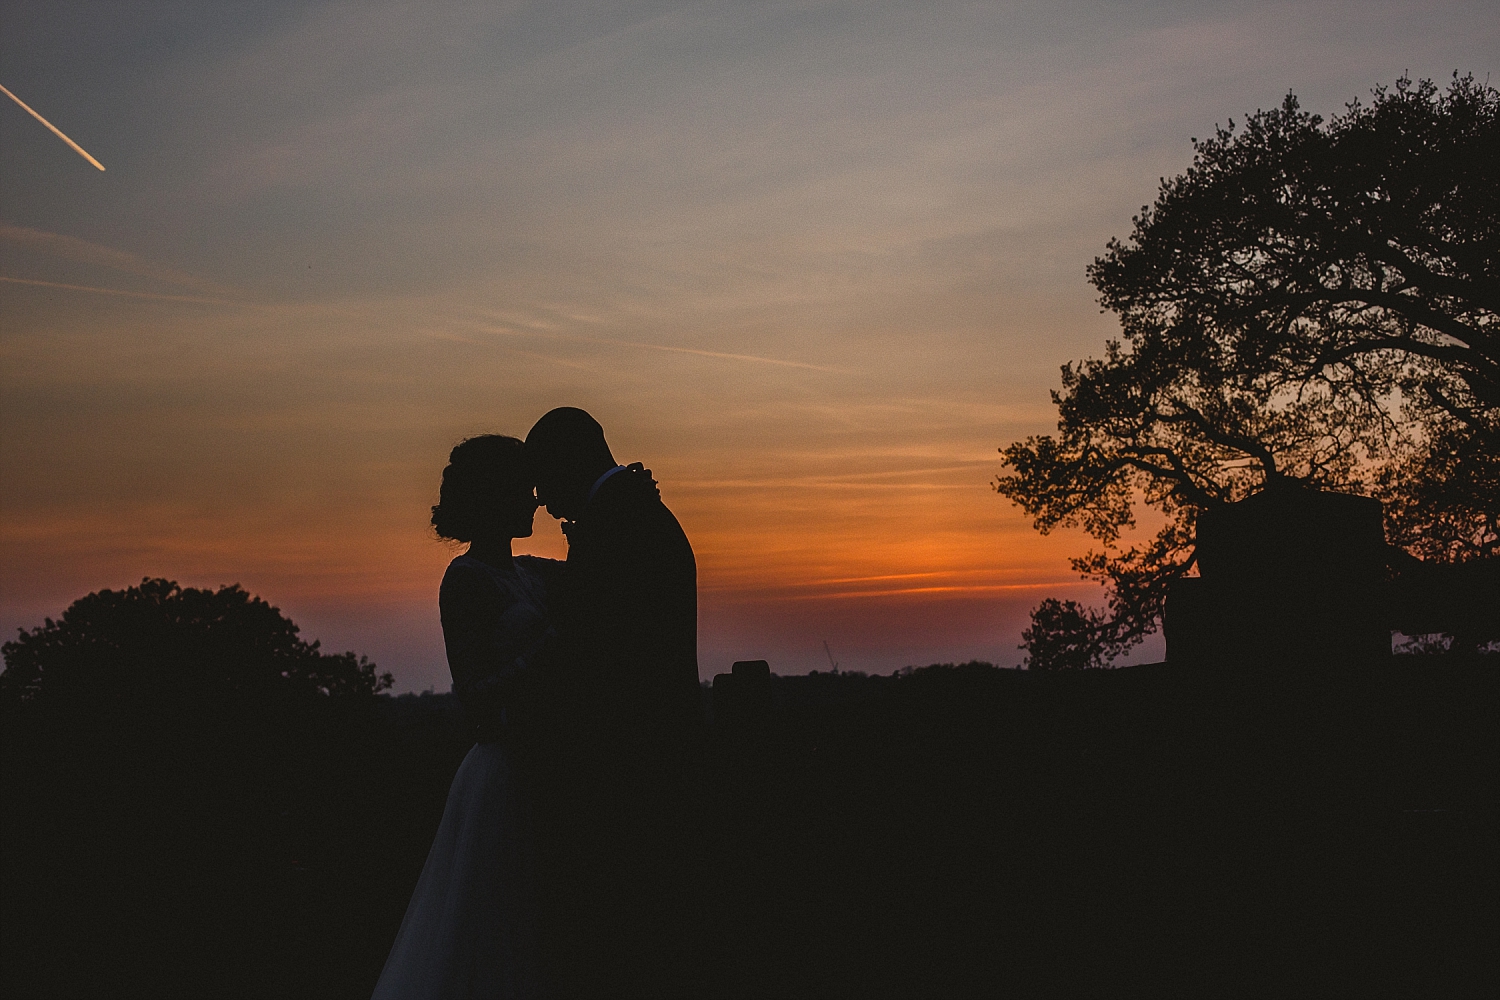 Essex Wedding Photographer - Gaynes Park Wedding at Sunset